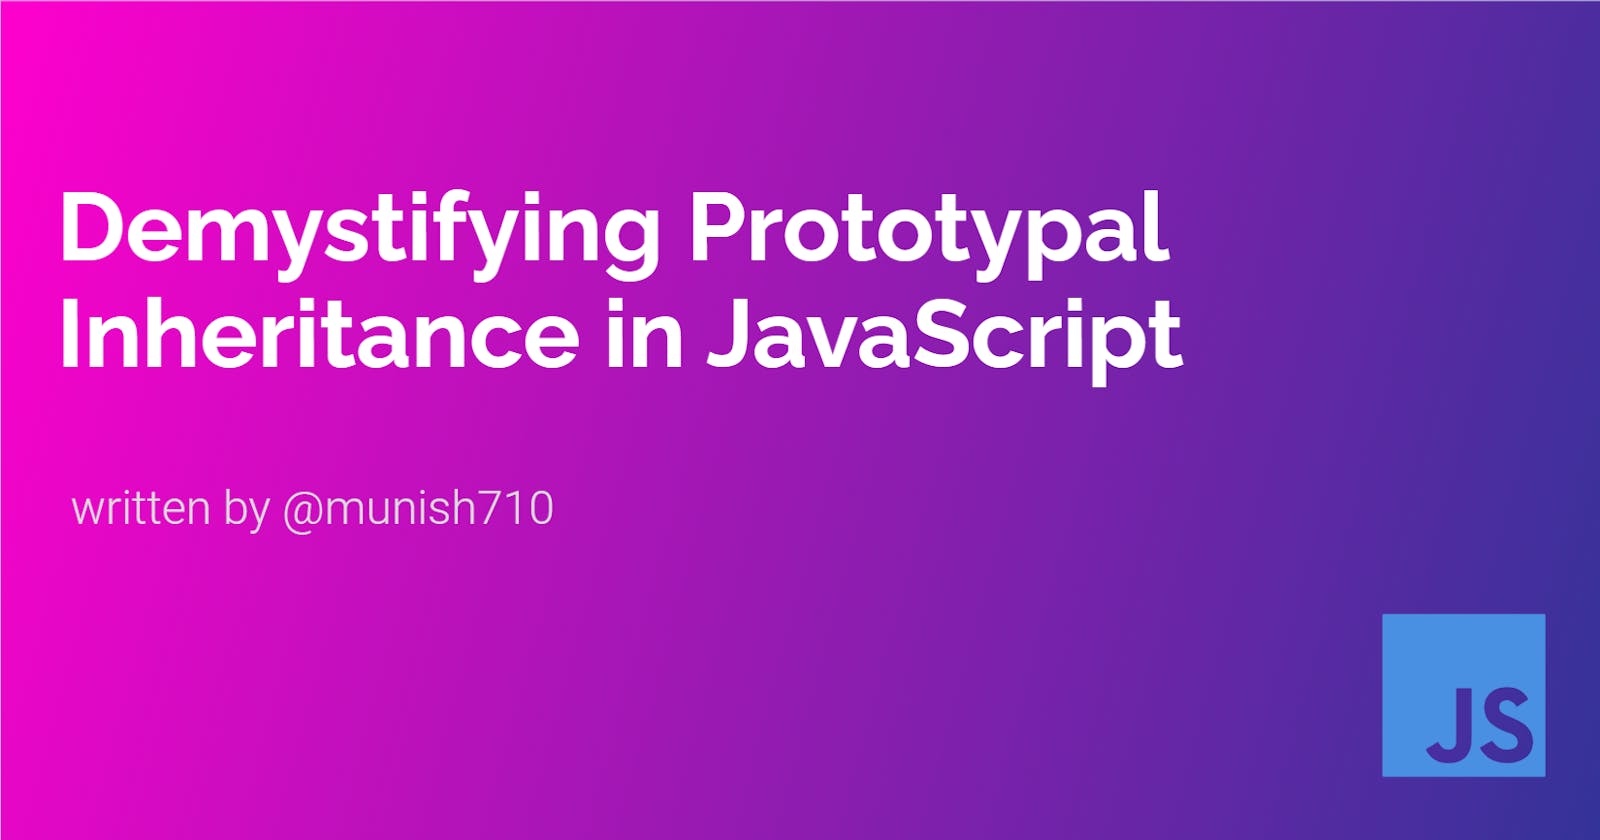 Demystifying Prototypal inheritance in JavaScript